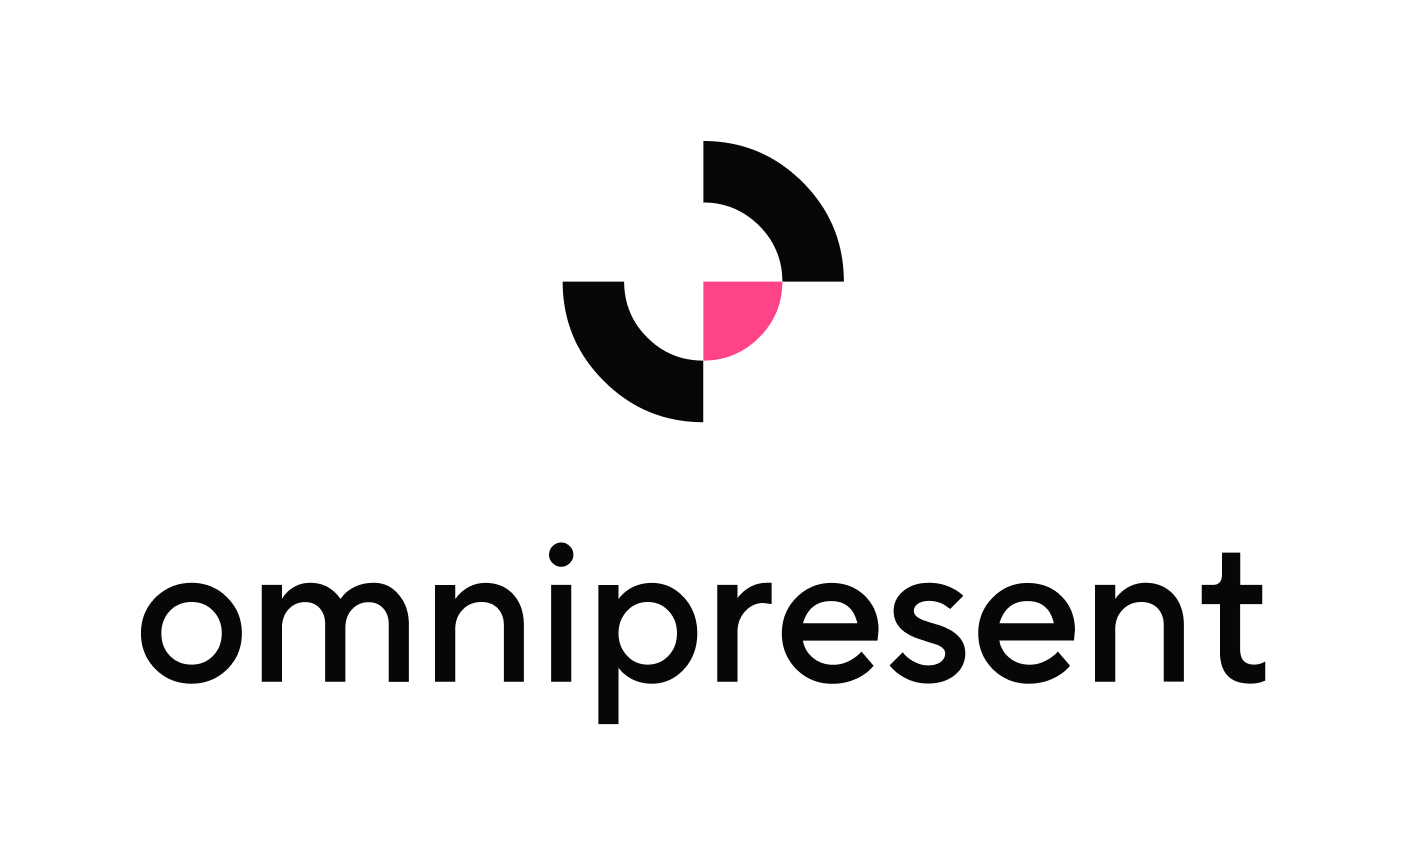 omnipresent logo